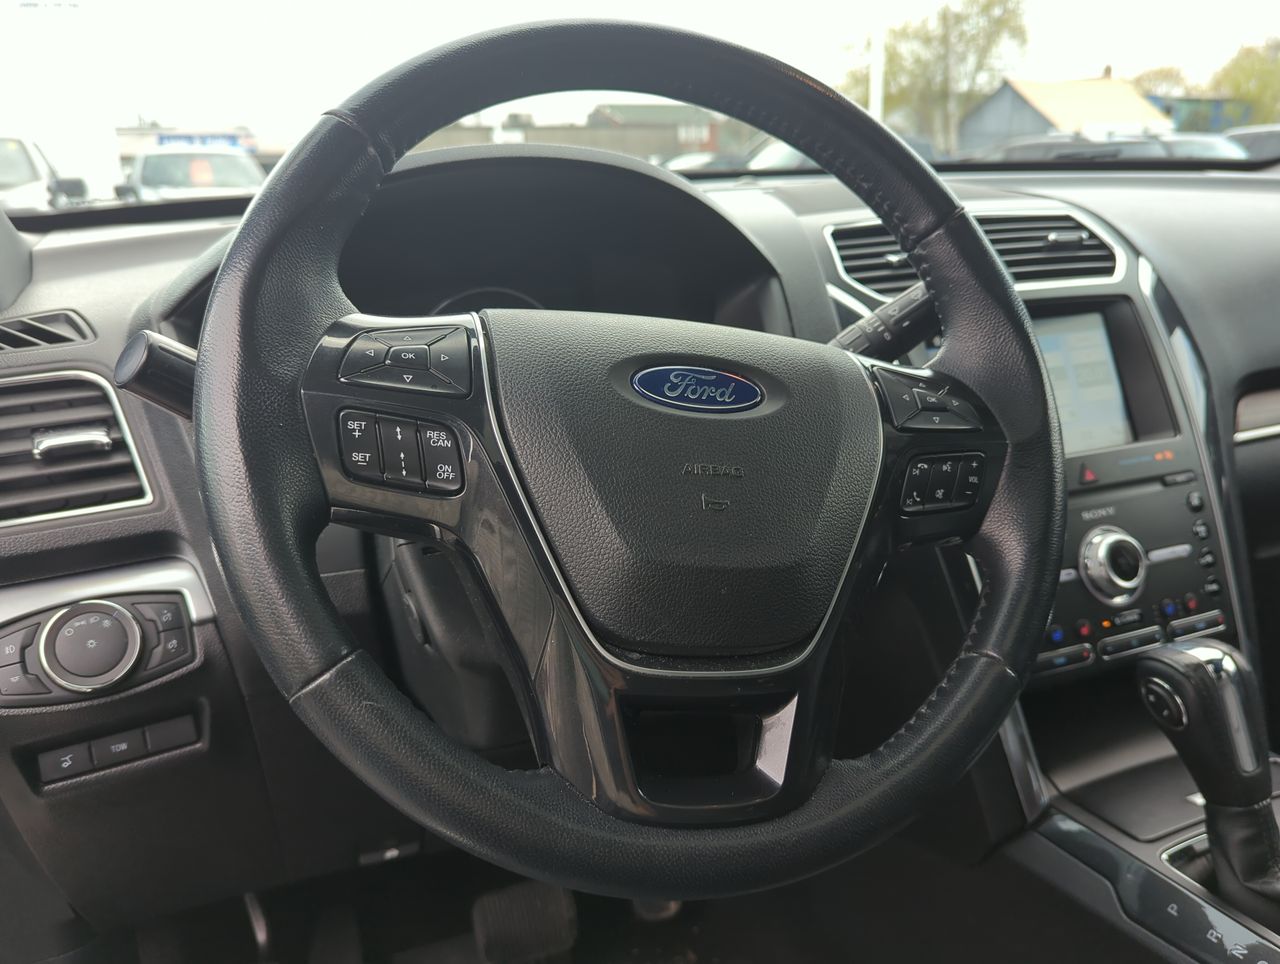 2019 Ford Explorer - 21631A Full Image 14